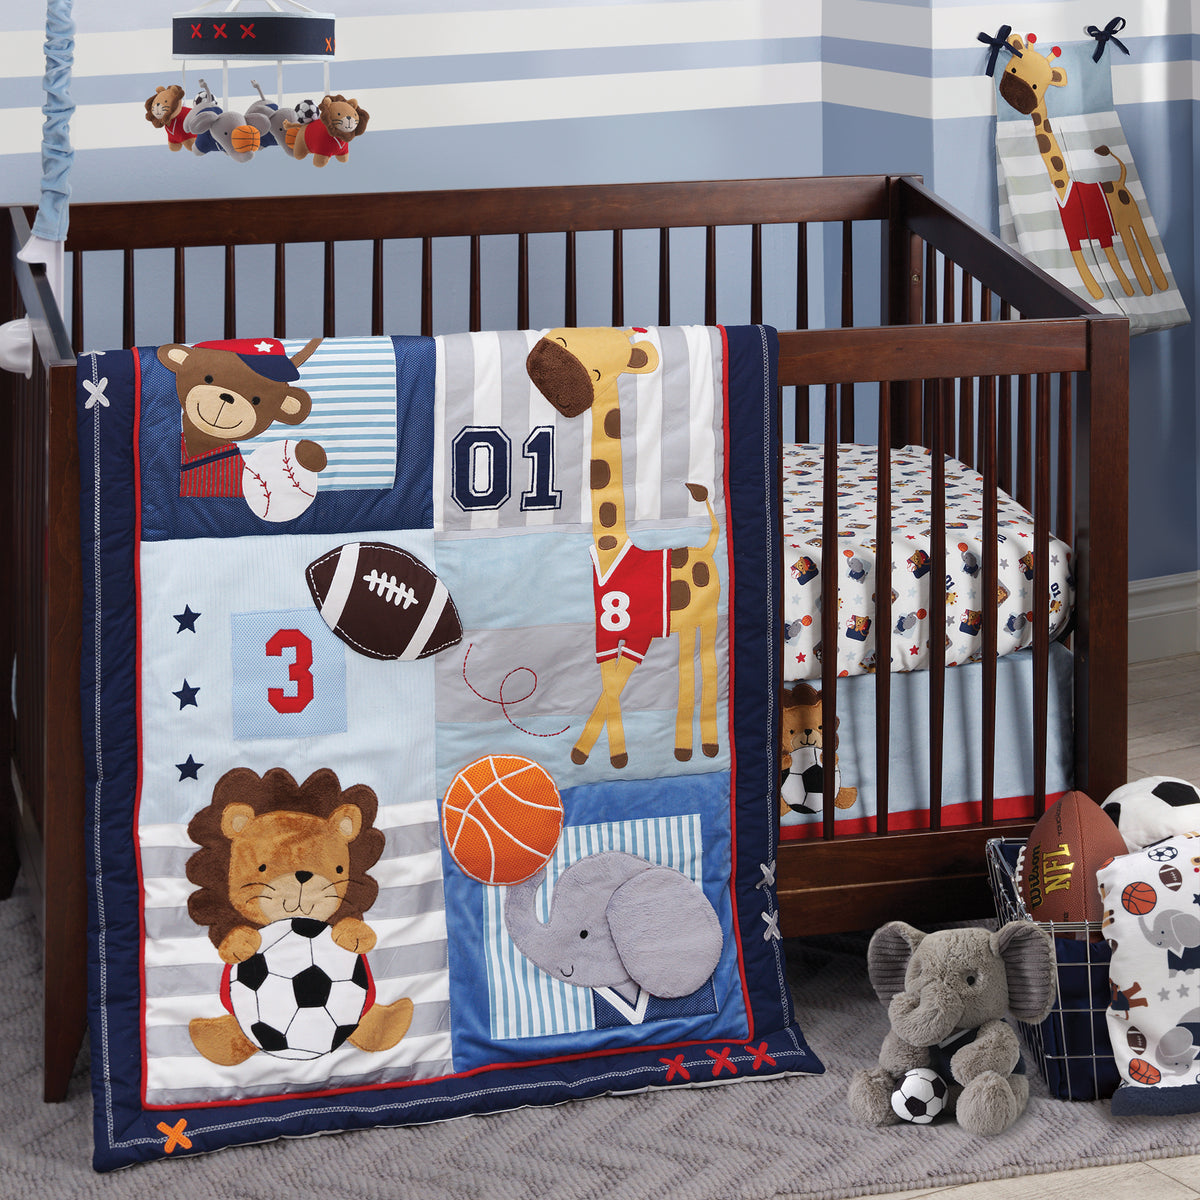 Lambs & Ivy Future All Star Baby Nursery Crib Bedding CHOOSE 4 5 6 7 8 PC Set